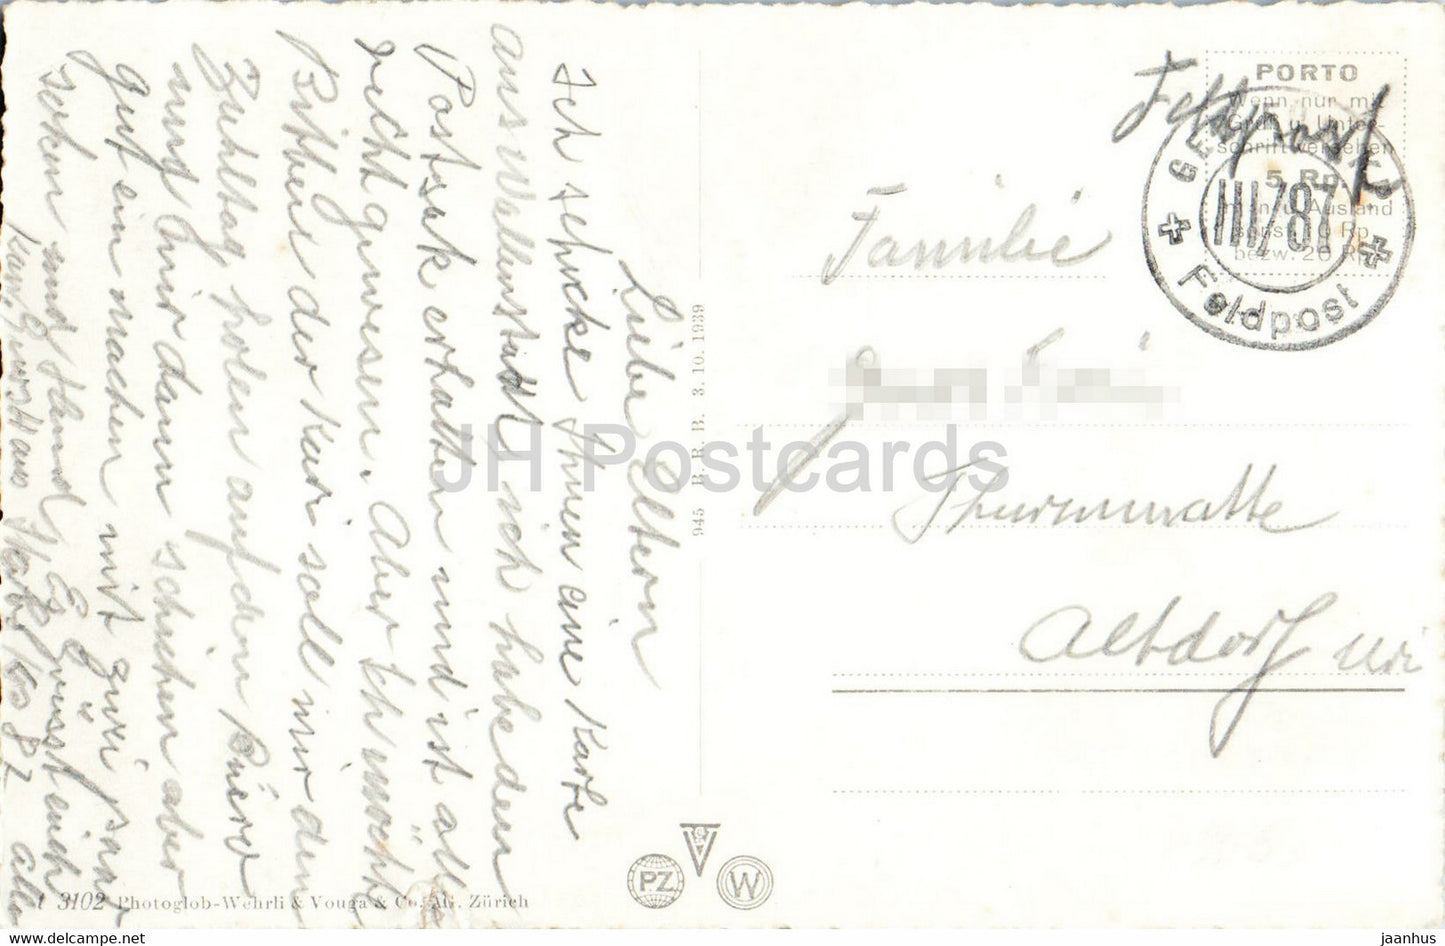 Wallenstadt - Kaserne - Feldpost - military mail - 3102 - old postcard - Switzerland - used